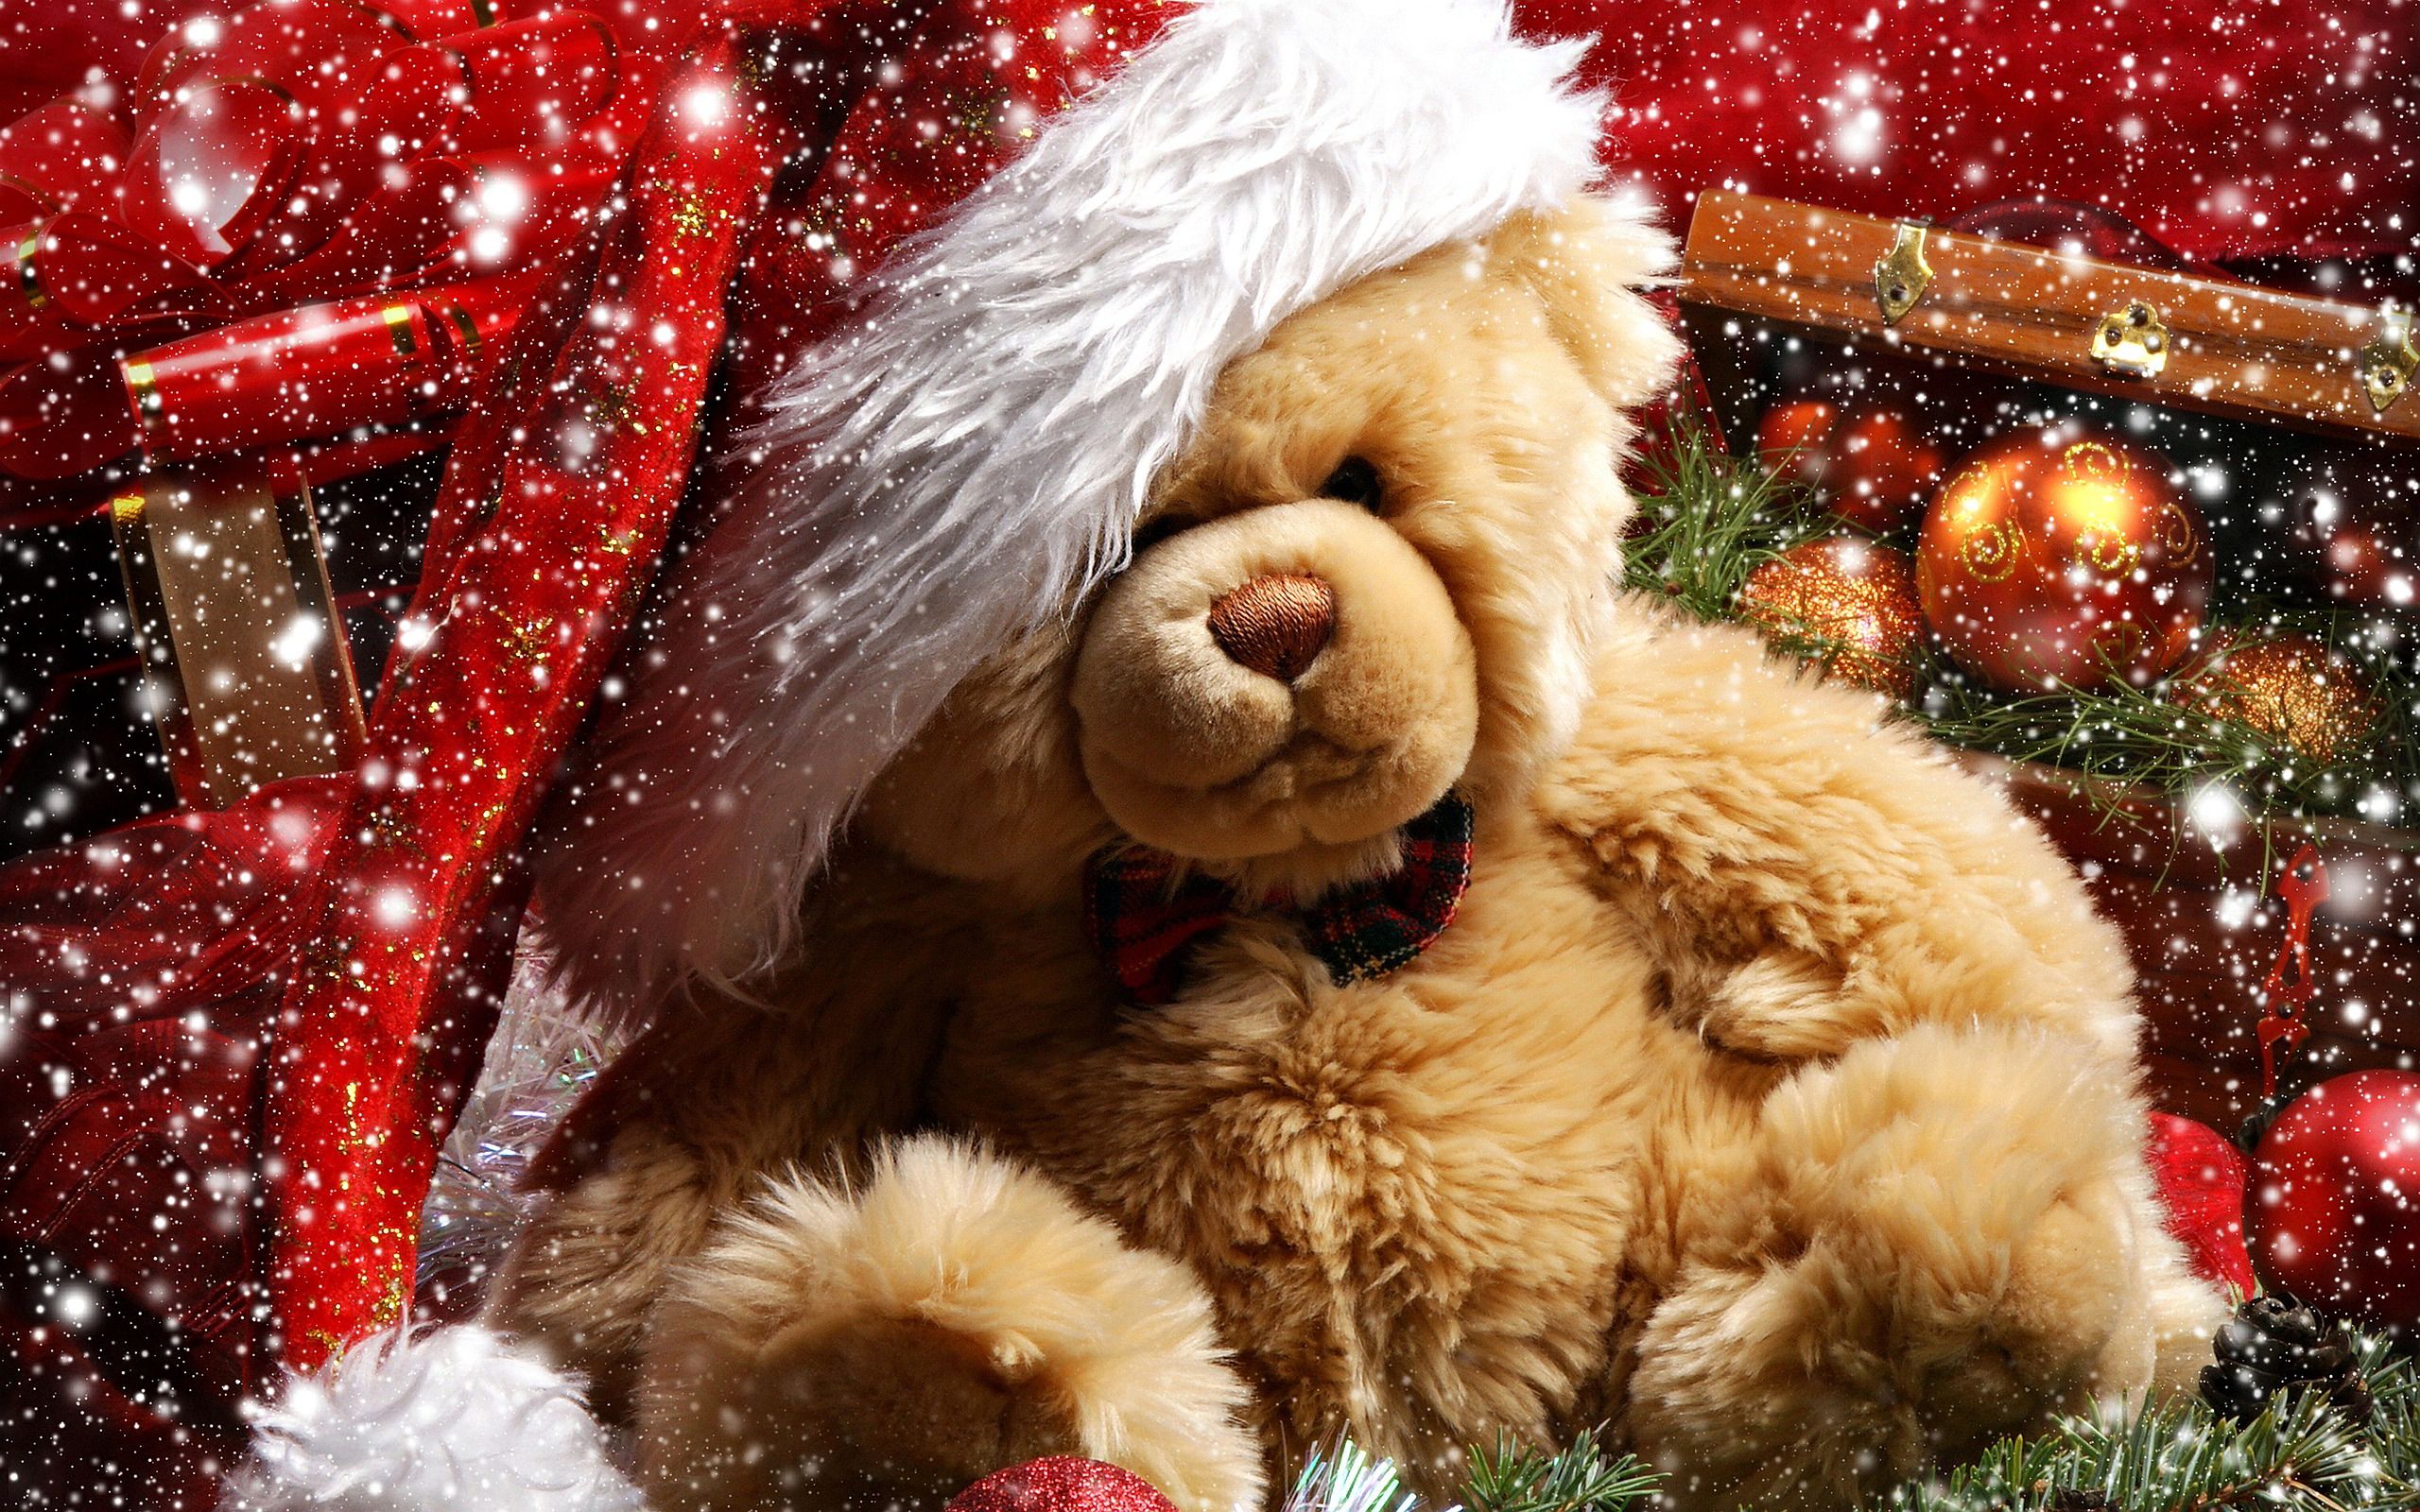 Top 20 Cute Teddy bear wallpaper for happy Teddy day 2015